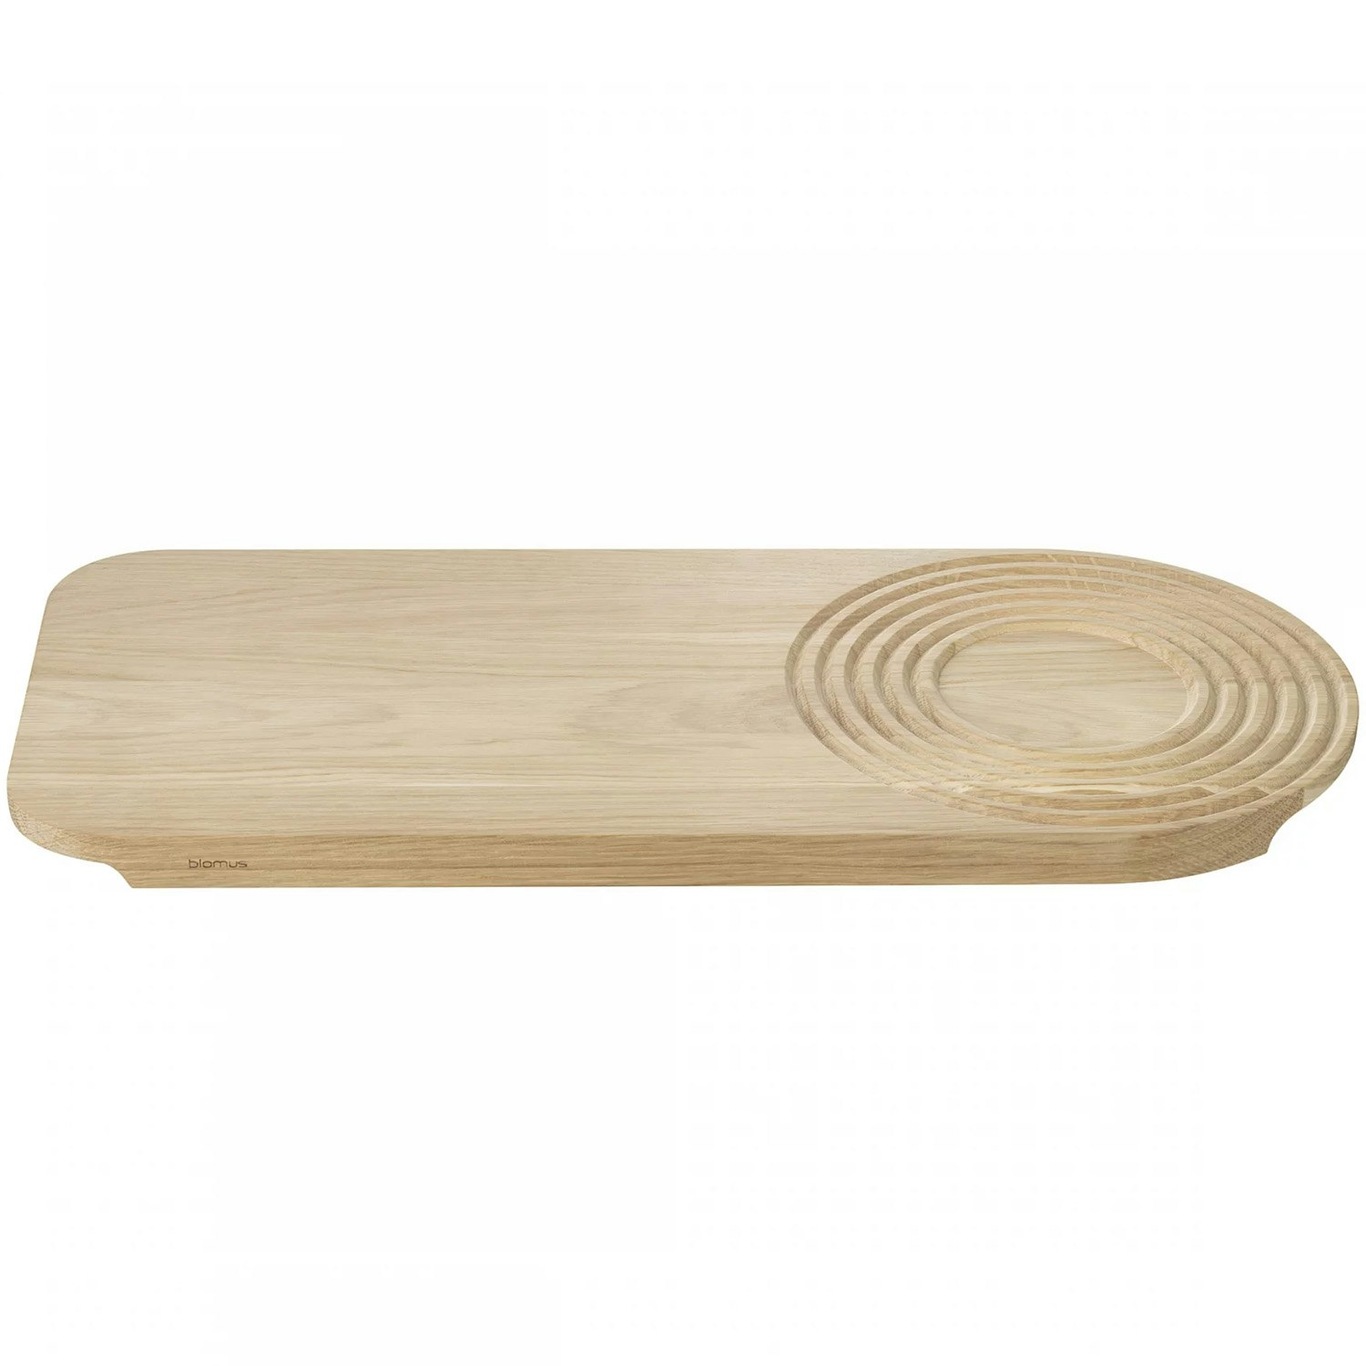 https://royaldesign.com/image/2/blomus-zen-tray-cutting-board-45x20-cm-oak-0?w=800&quality=80